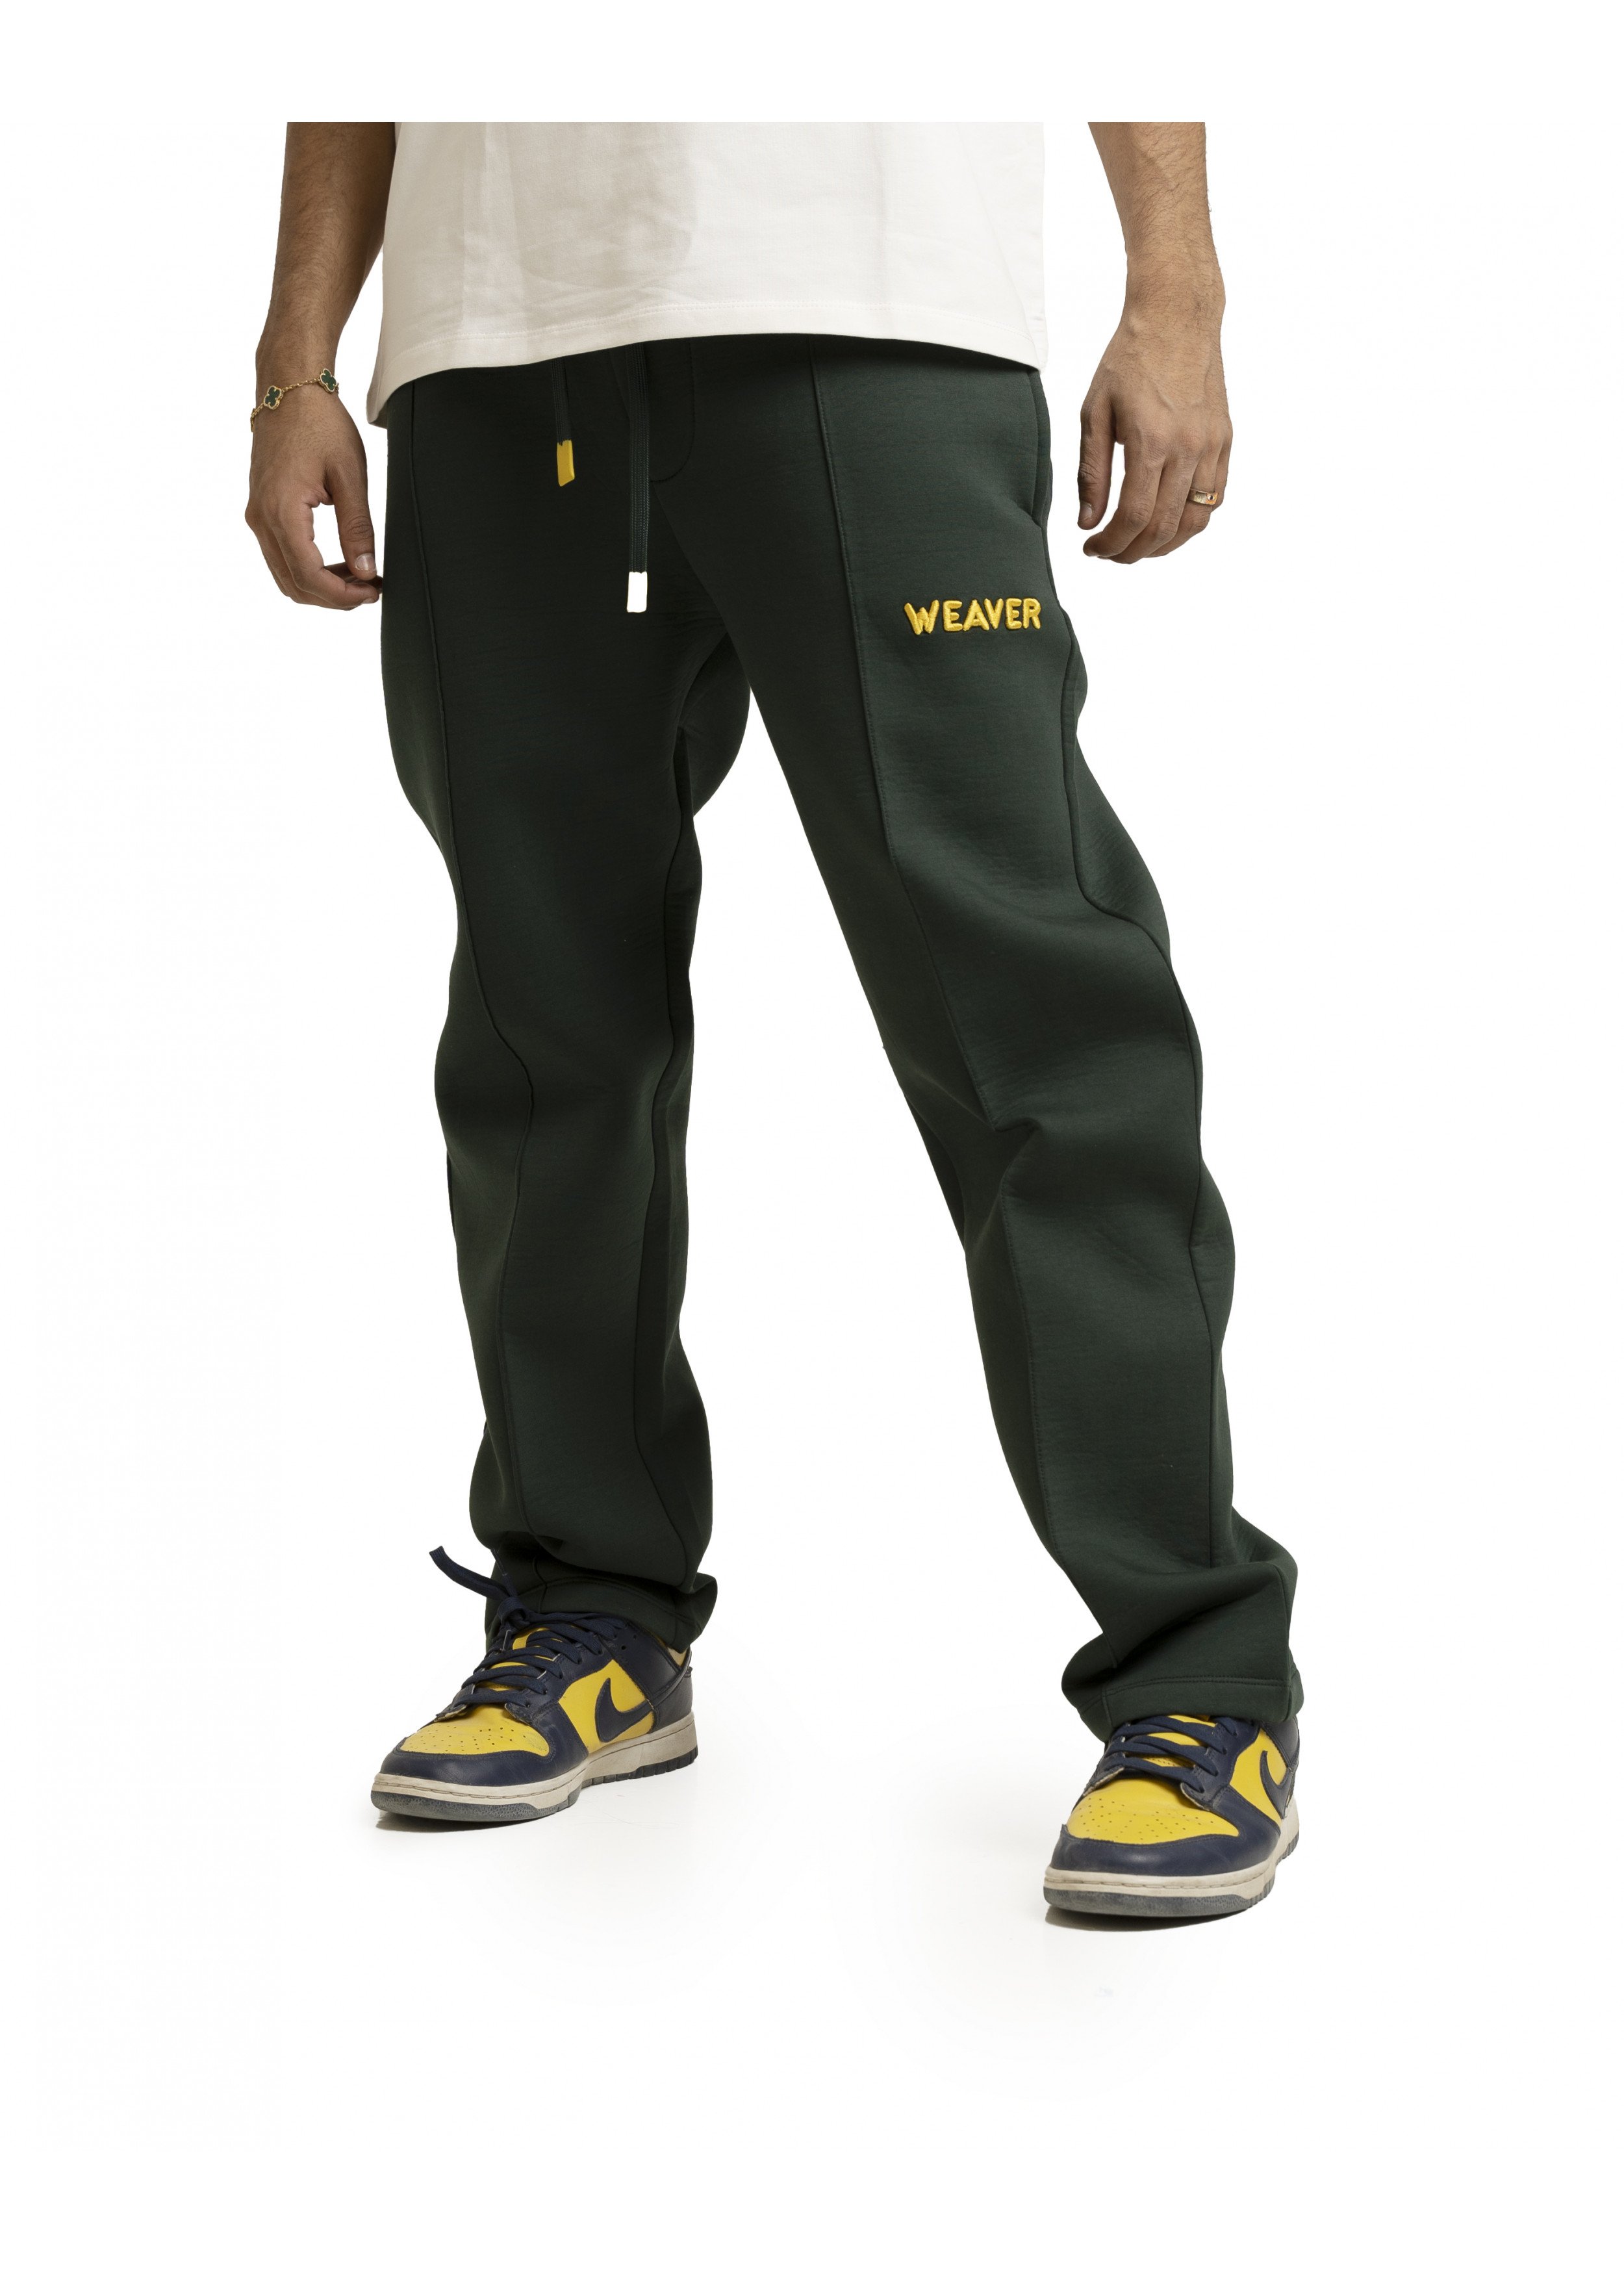 Unisex Pants Oversize - Green